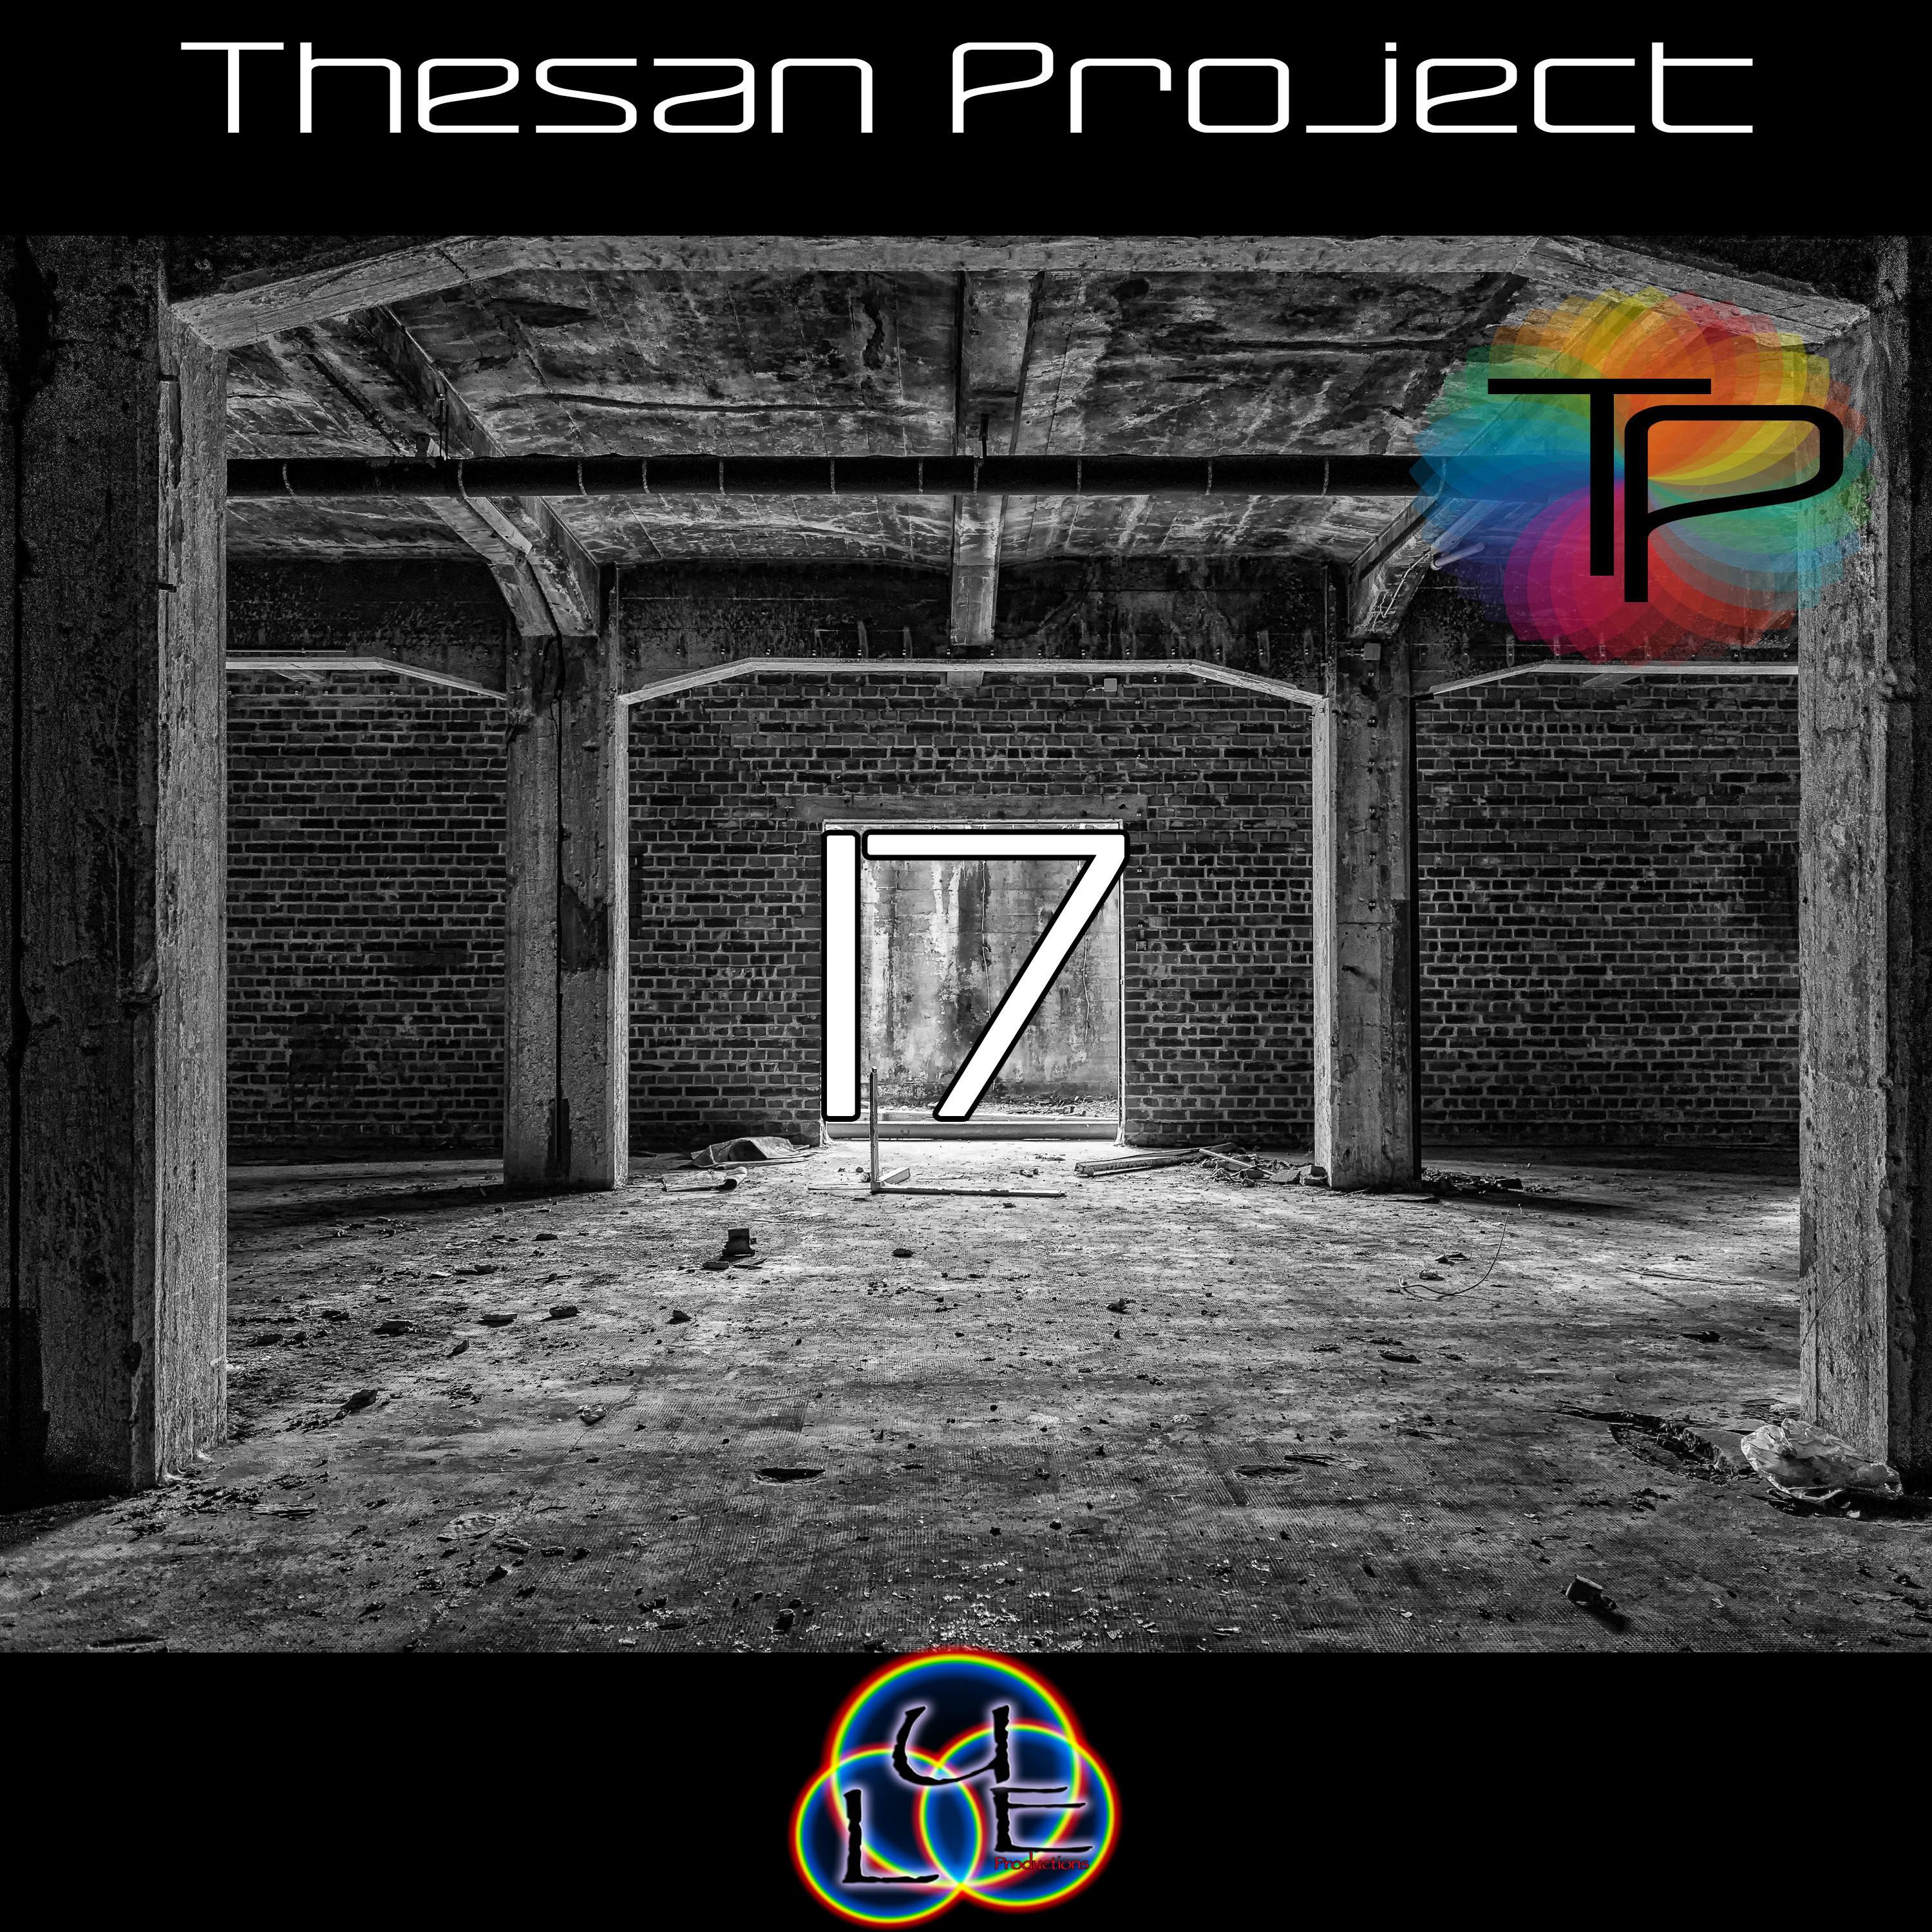 Thesan Project - Mister 17 (Edit)